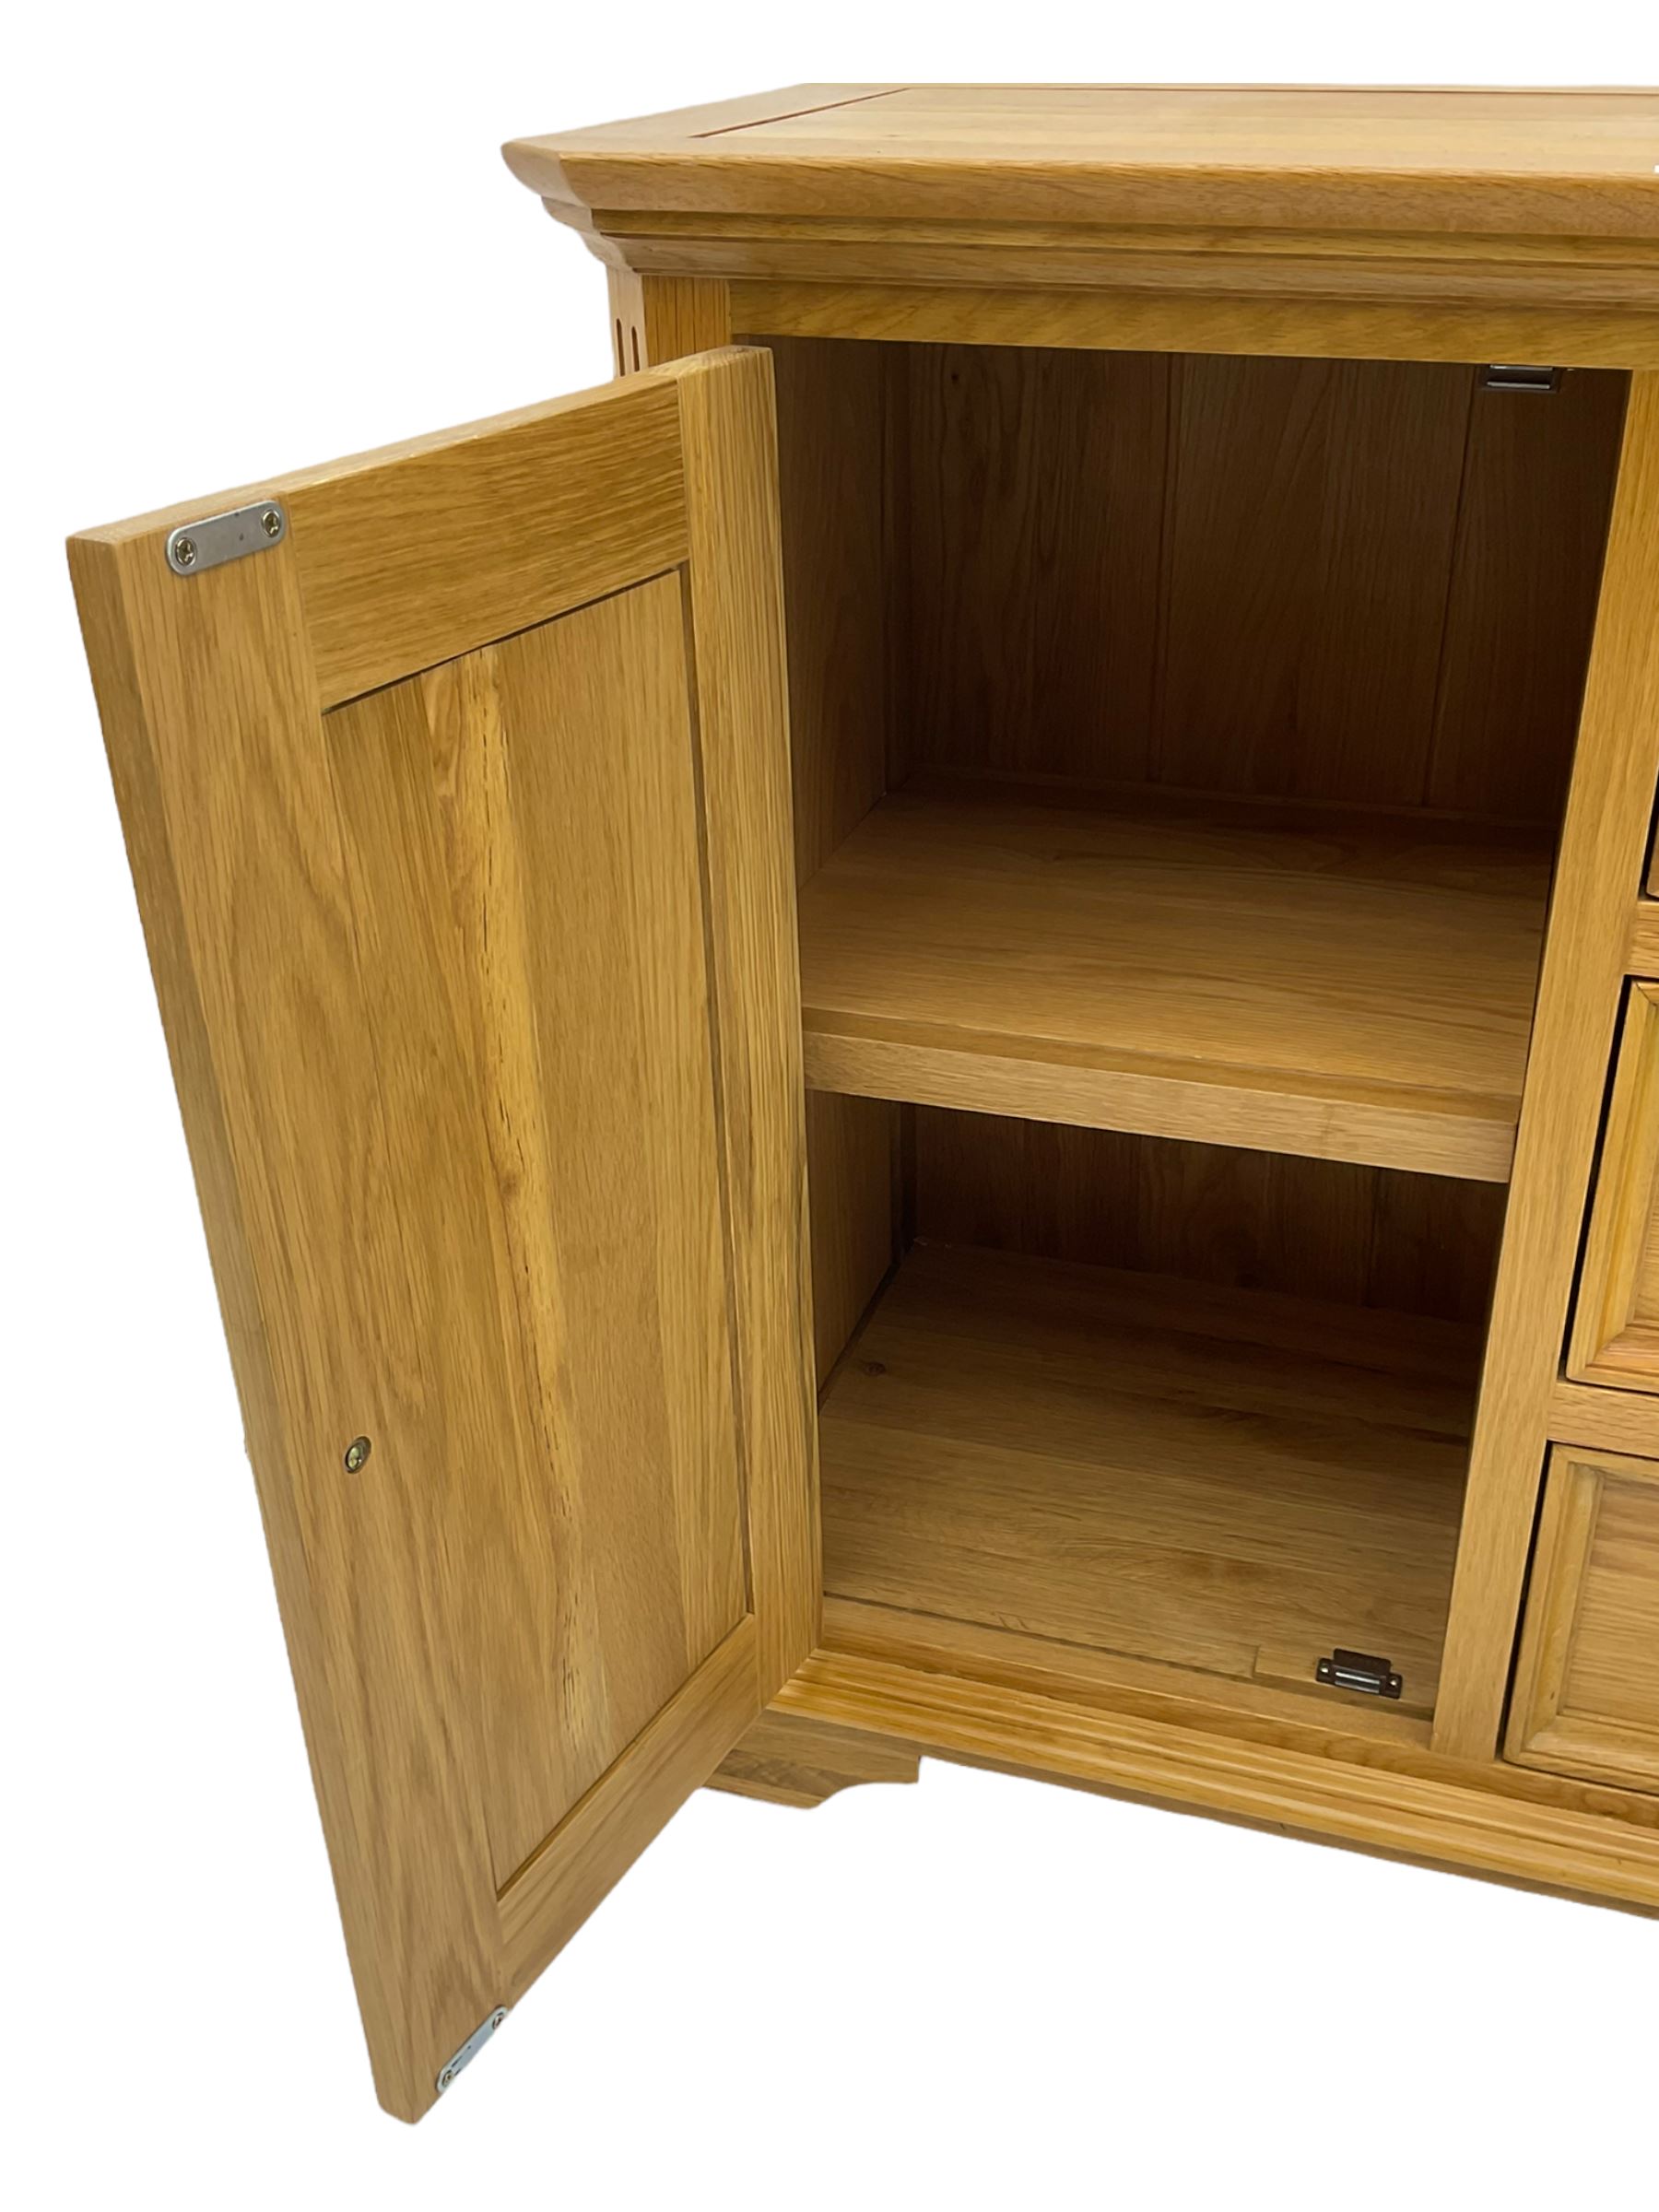 Light oak side cabinet - Image 3 of 5